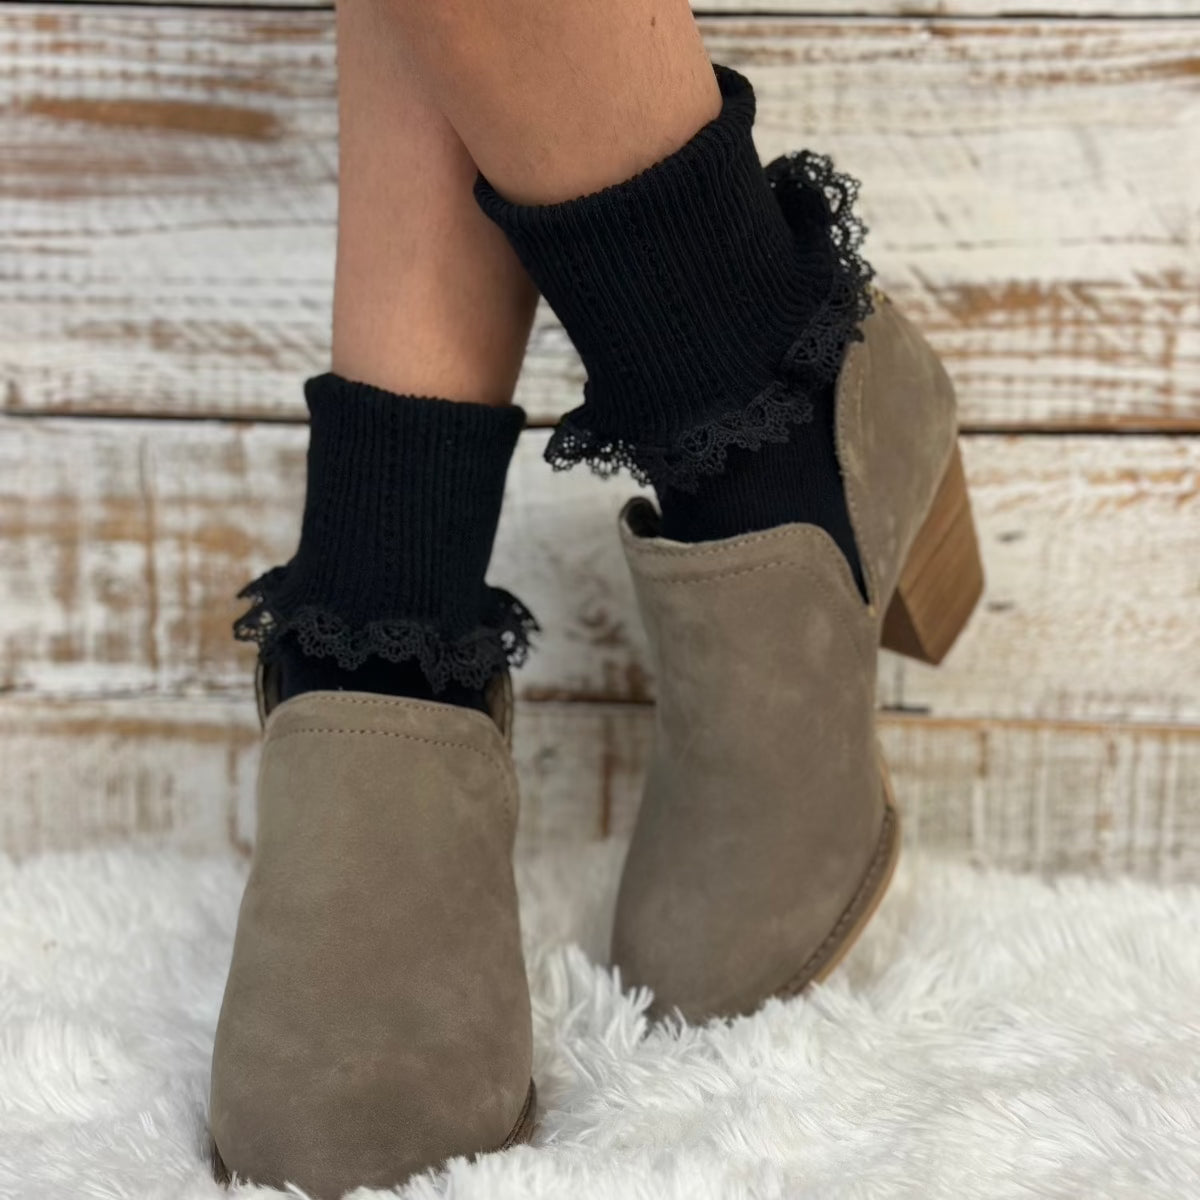 PROMOTIONAL SALE lace cuff ankle socks - black, lace ankle socks women’s best quality amazon